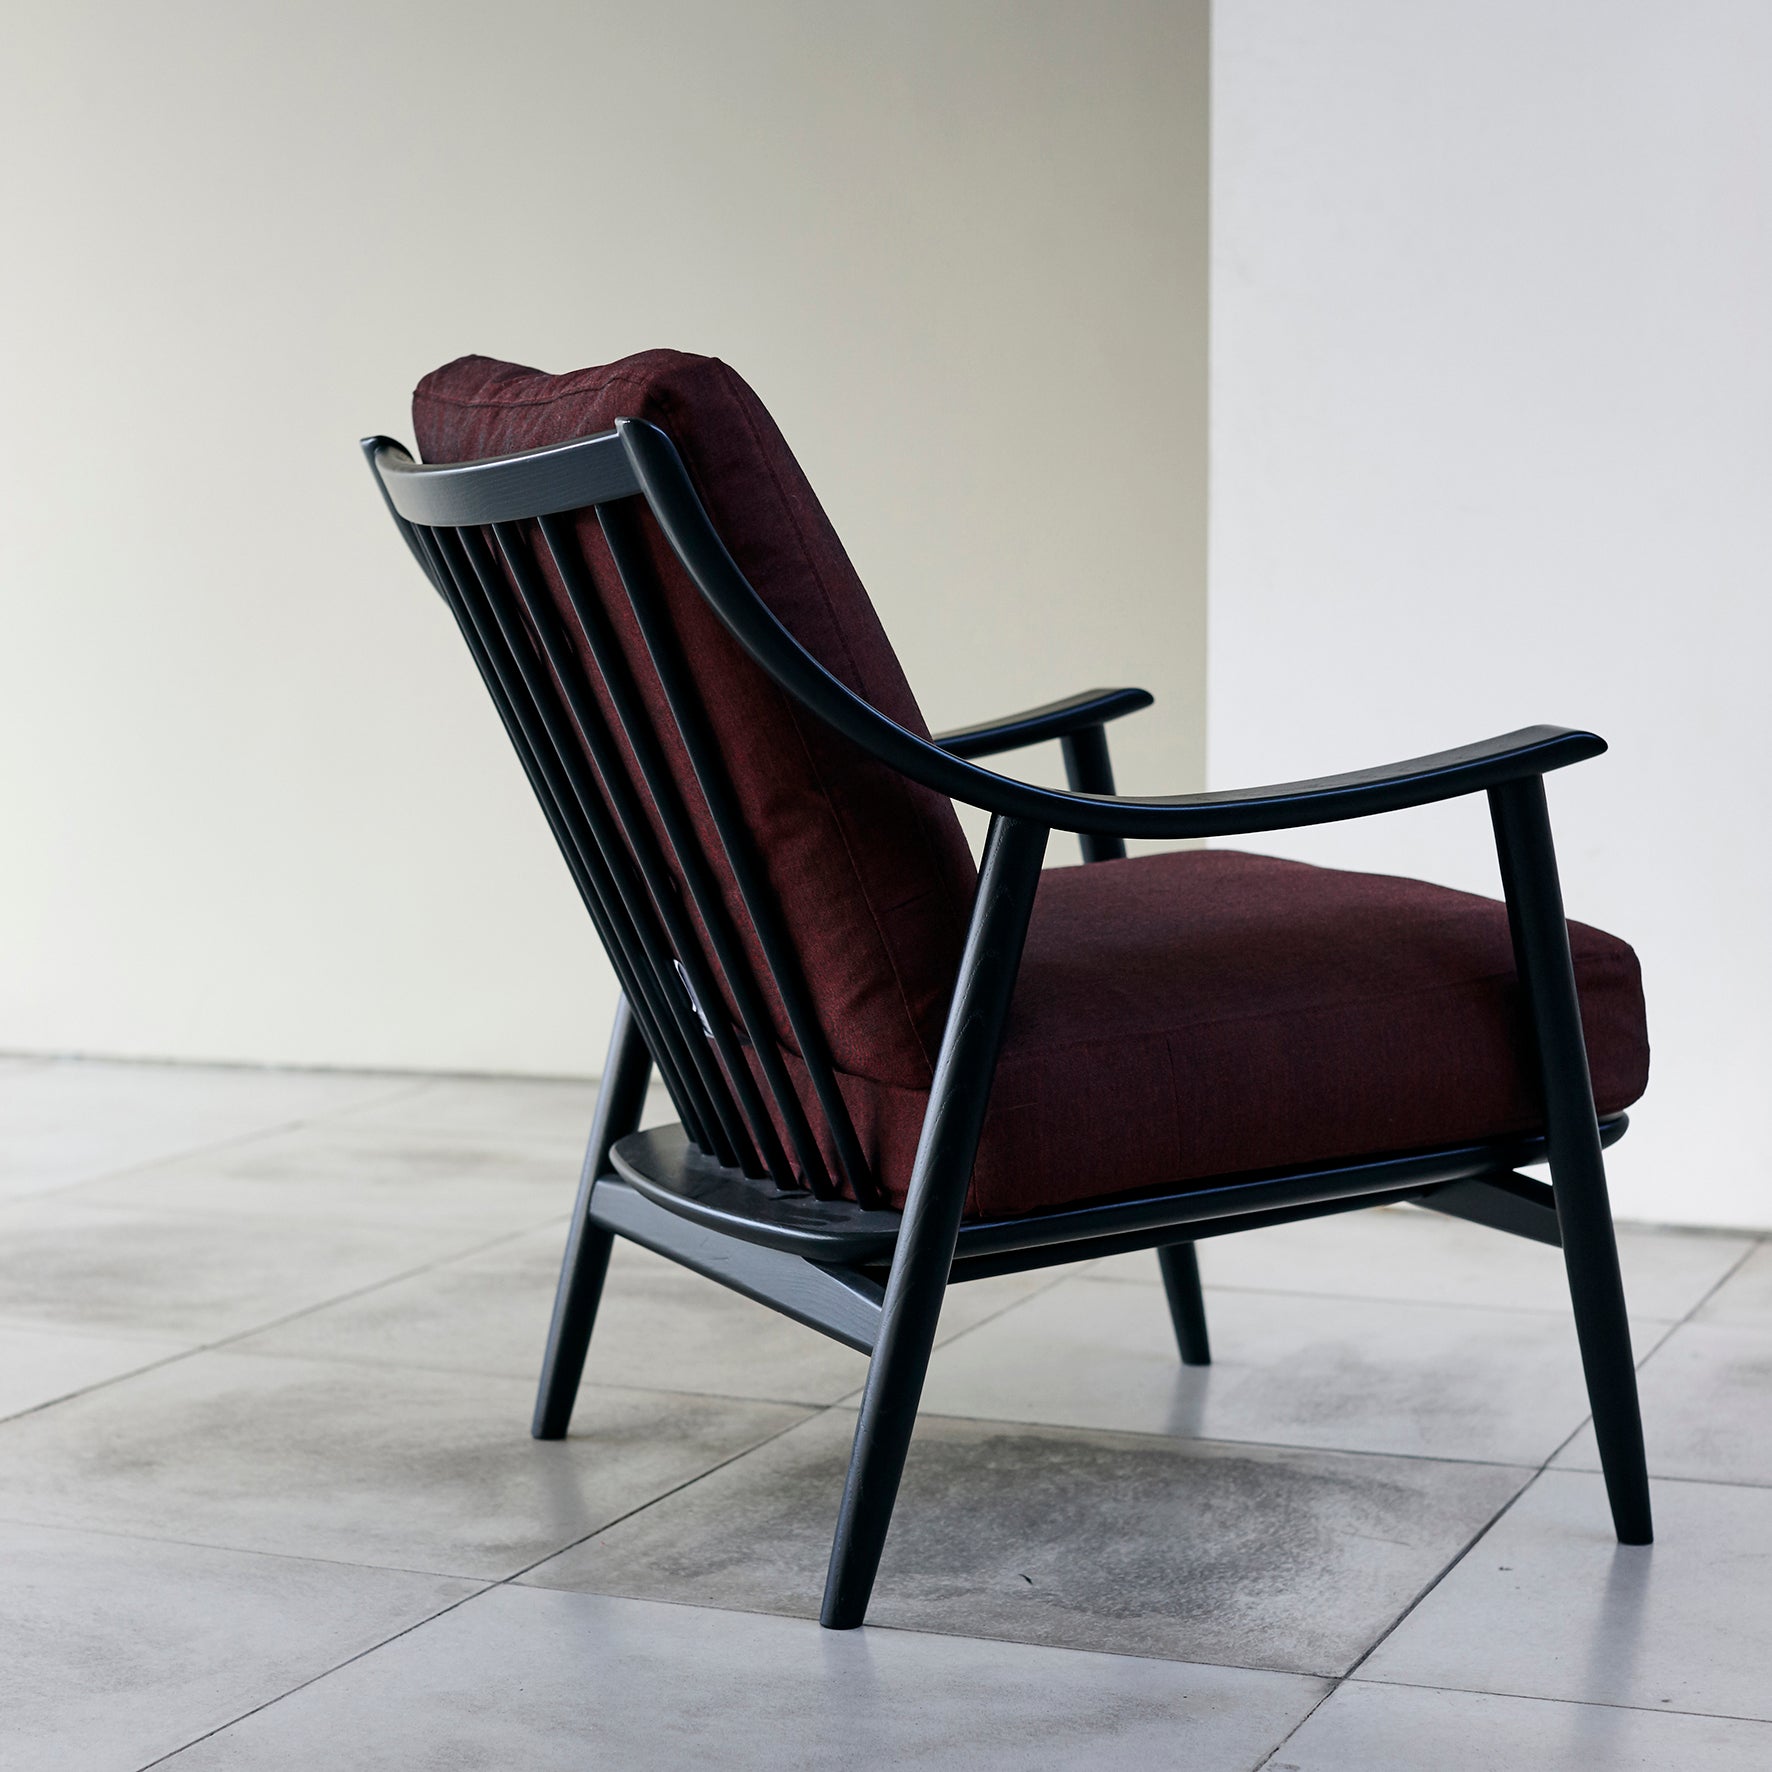 Marino Lounge Chair